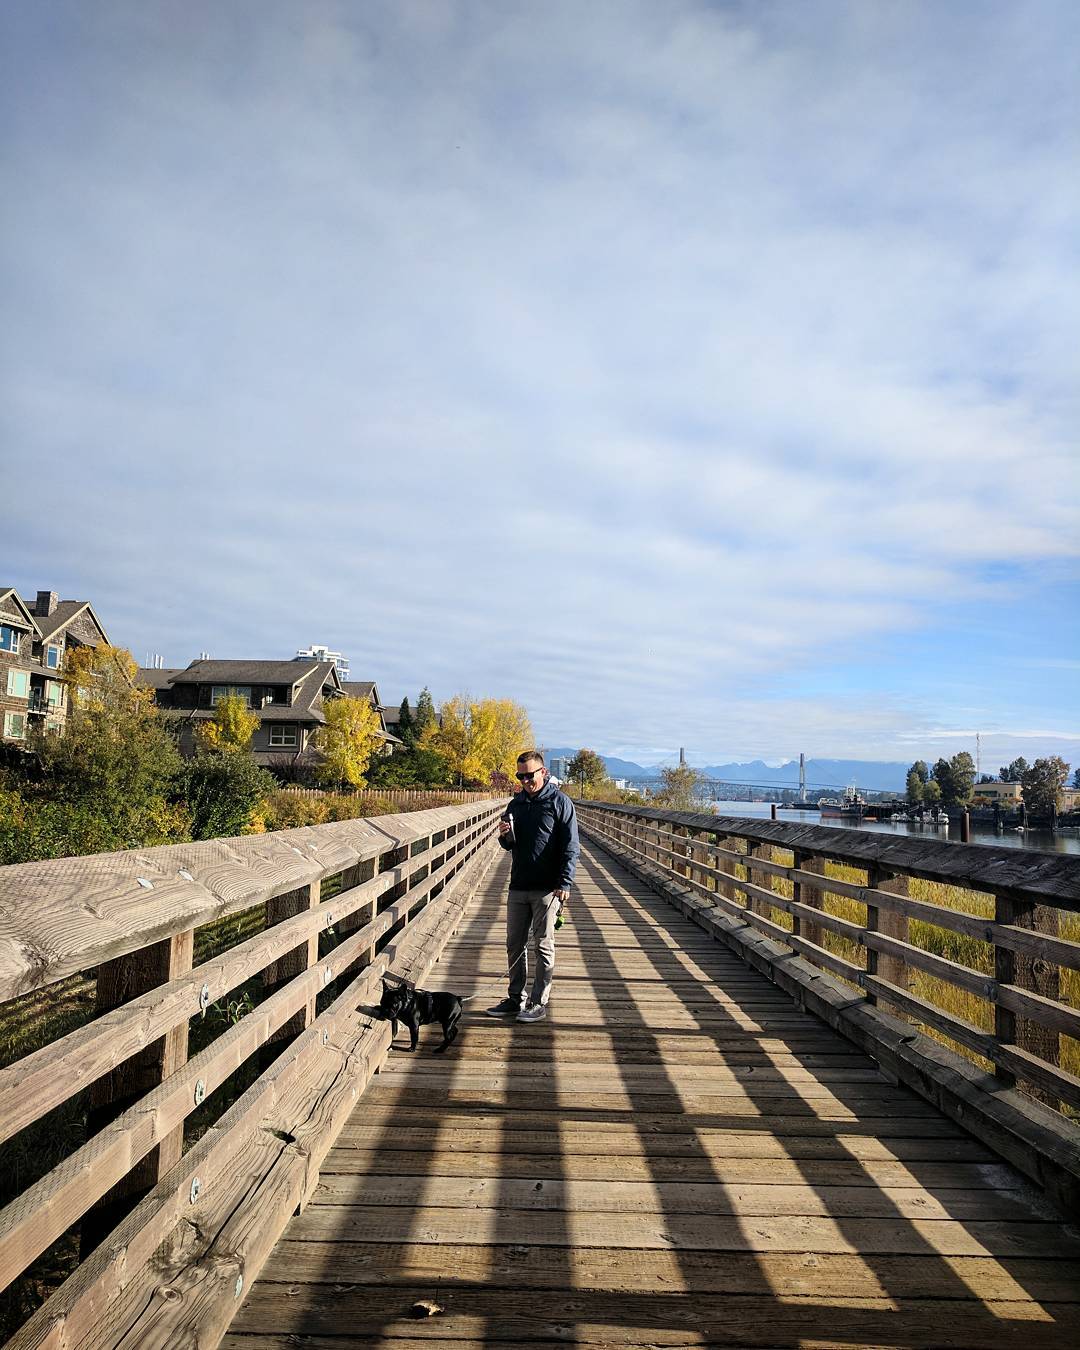 Man and dog on wooden bridge near river